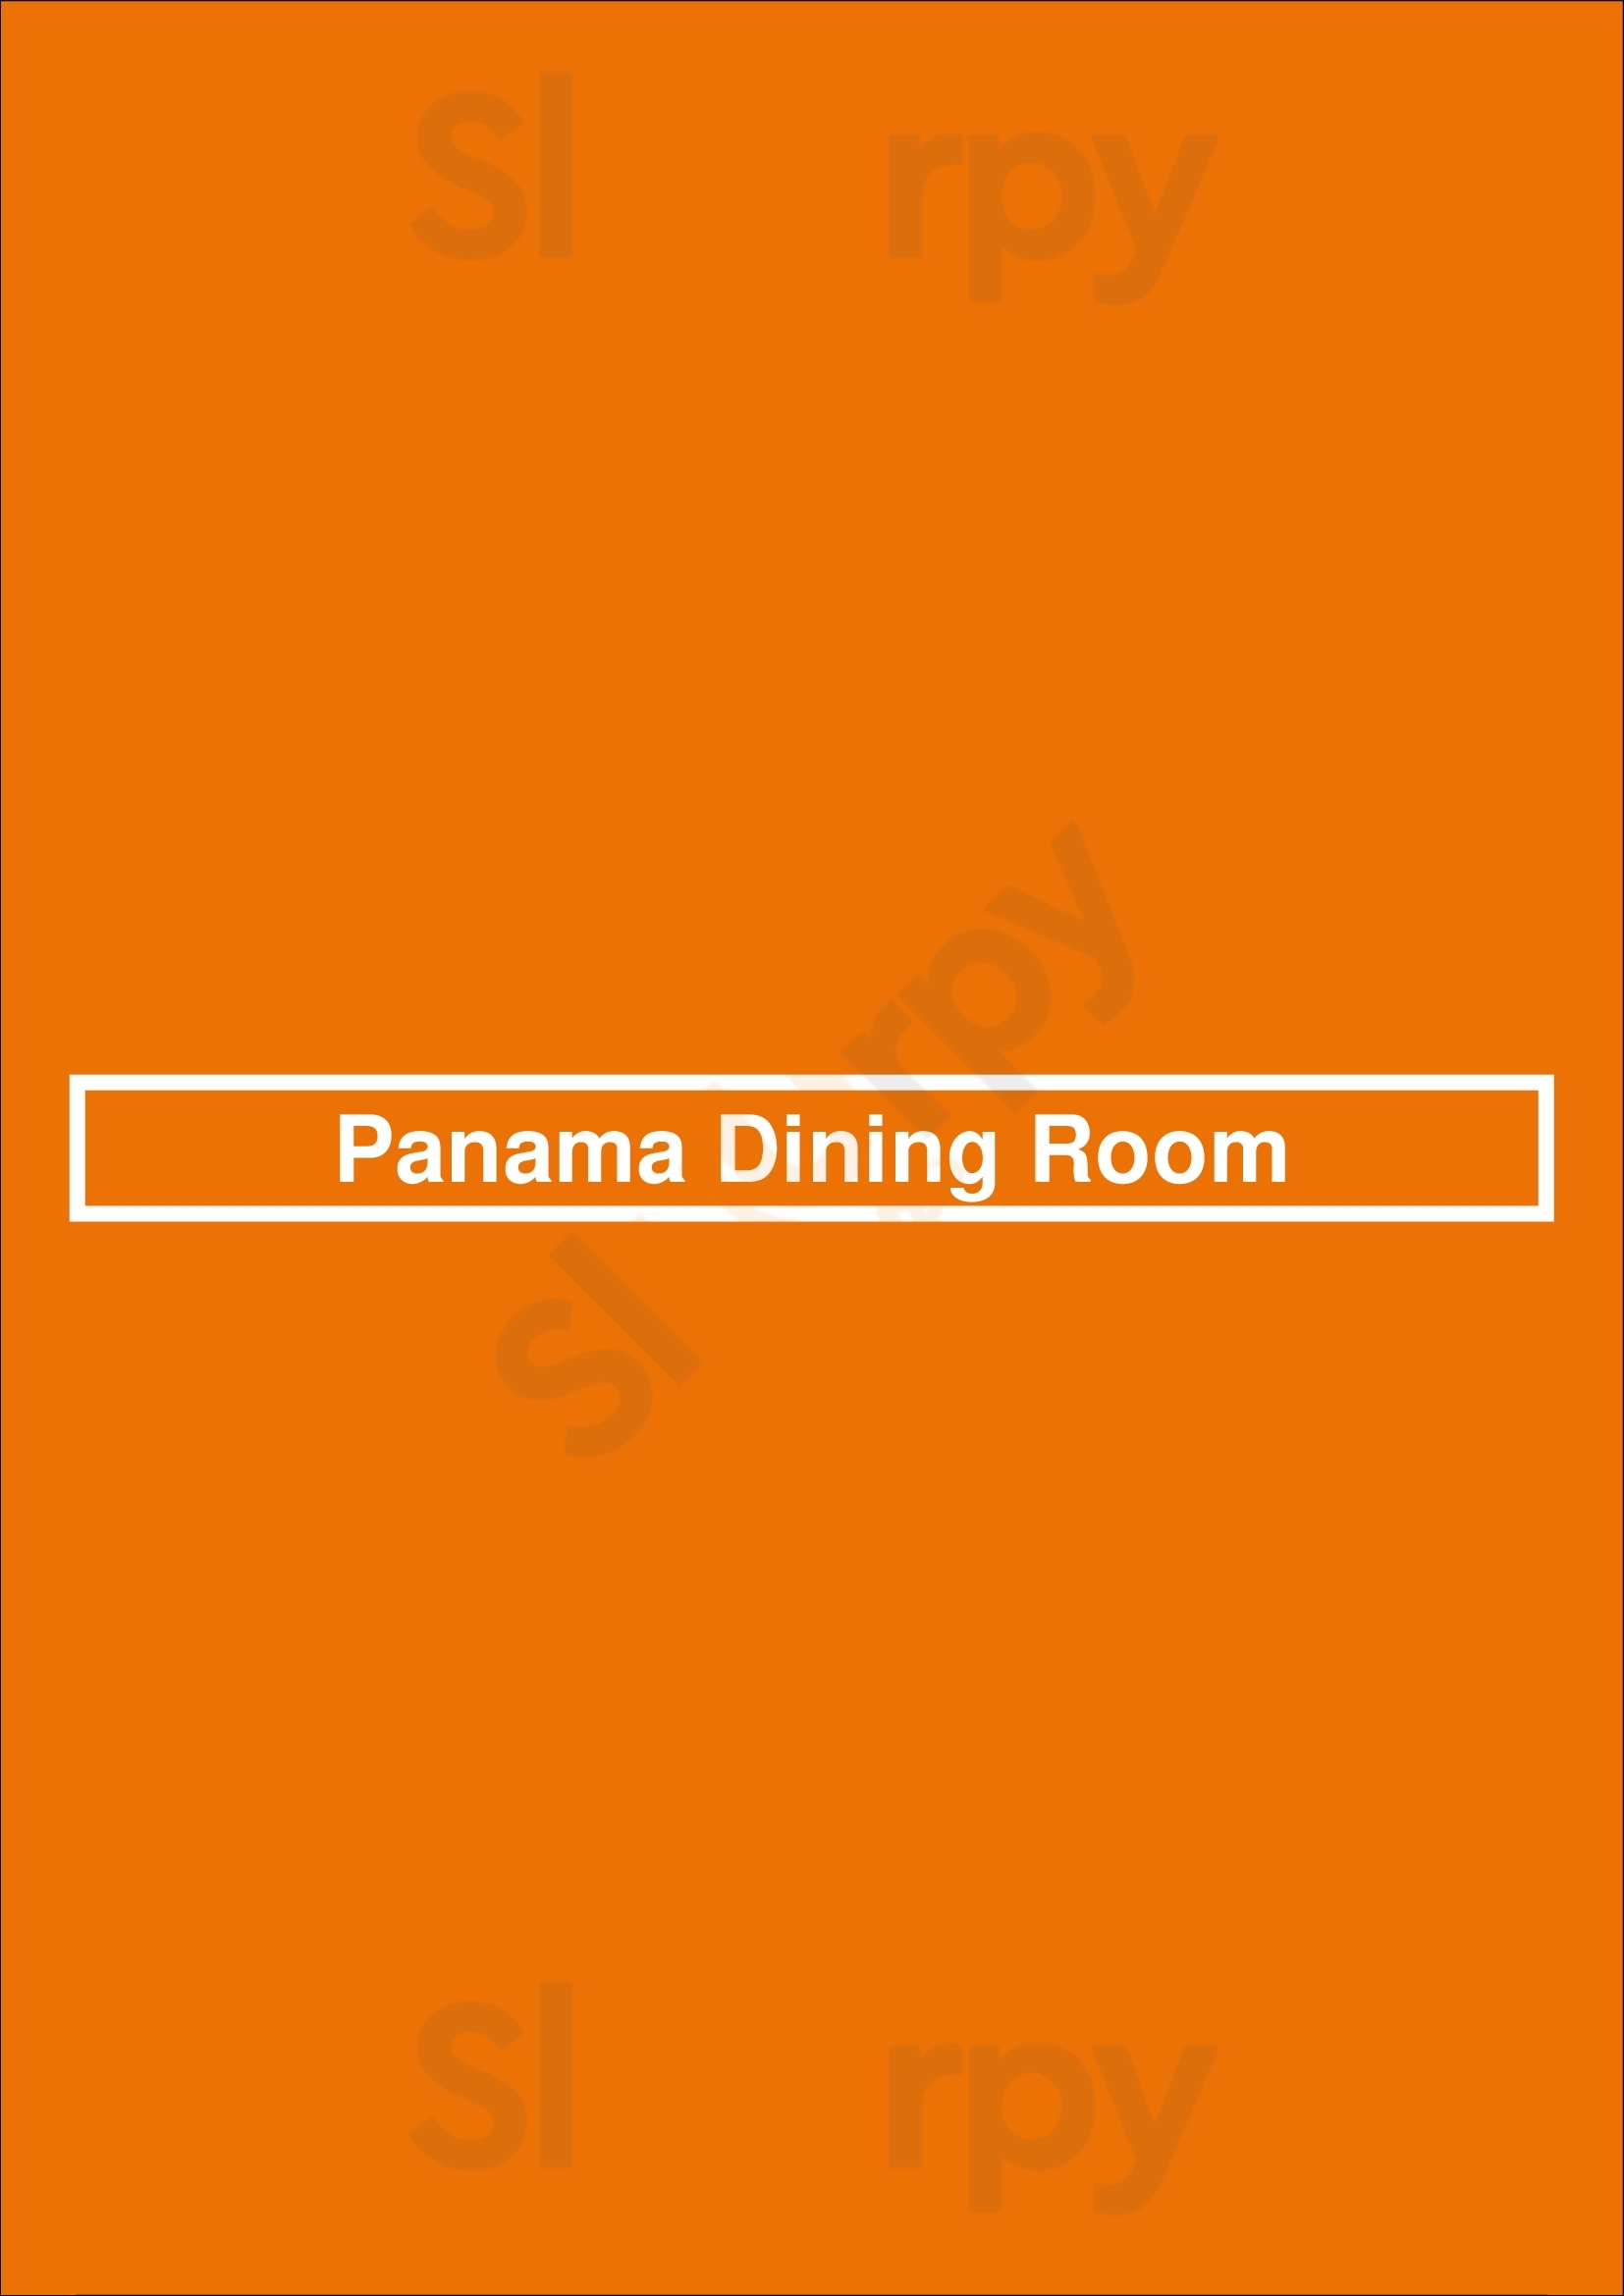 Panama Dining Room Fitzroy Menu - 1